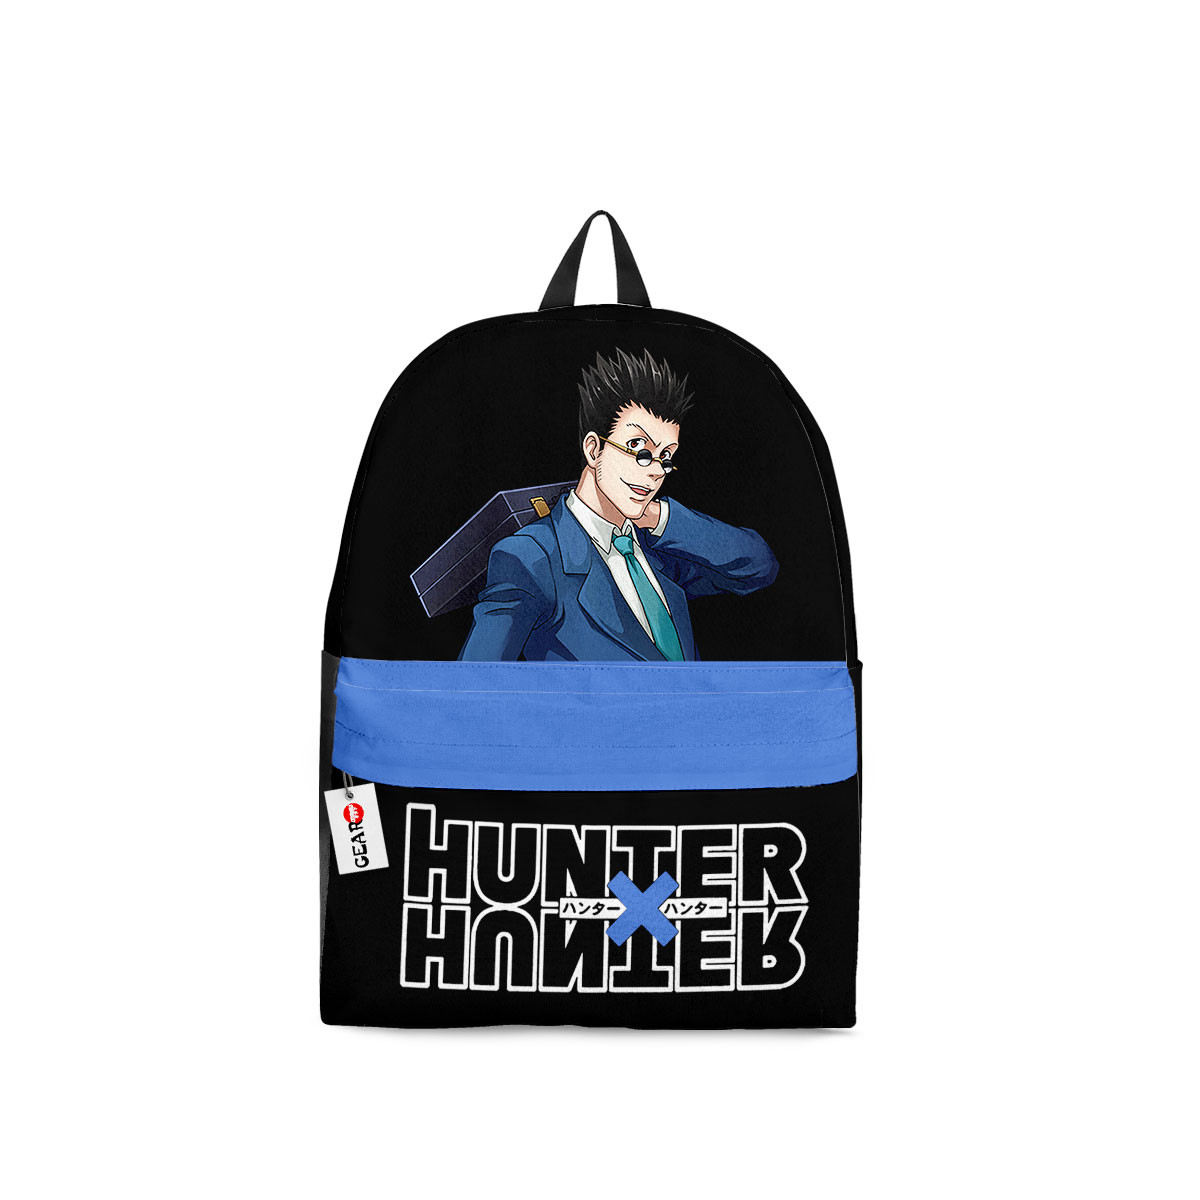 BEST Leorio HxH Anime Backpack Bag1